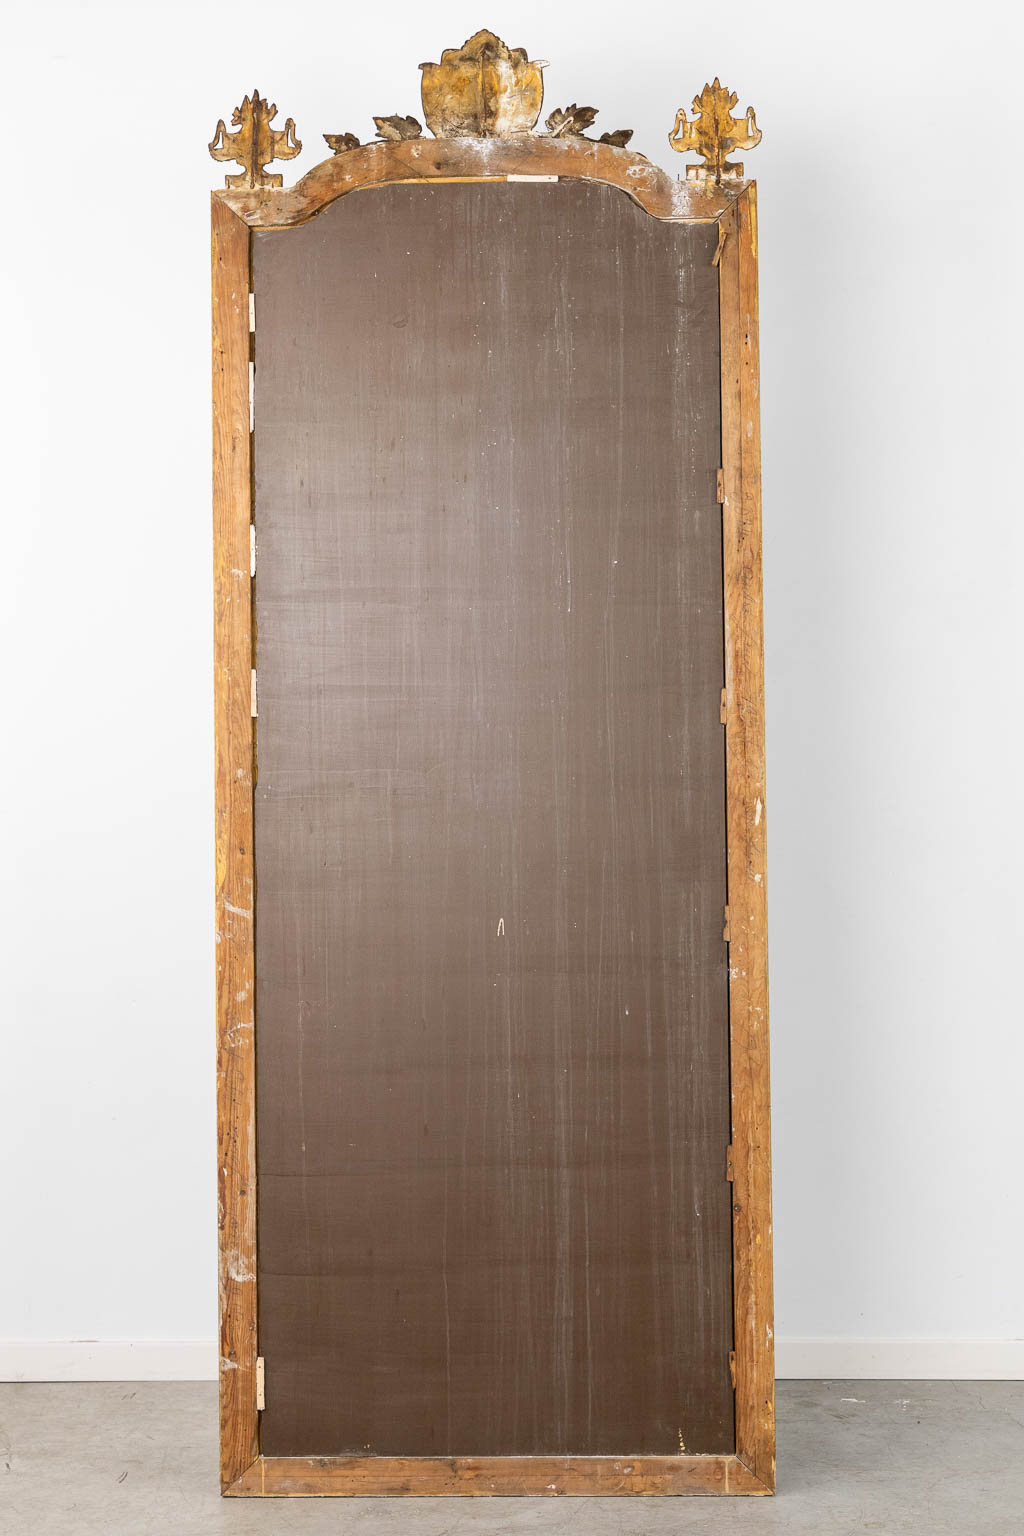 Three matching mirrors, gilt stucco in Louis XVI style. Circa 1900. (W:118 x H:226 cm)